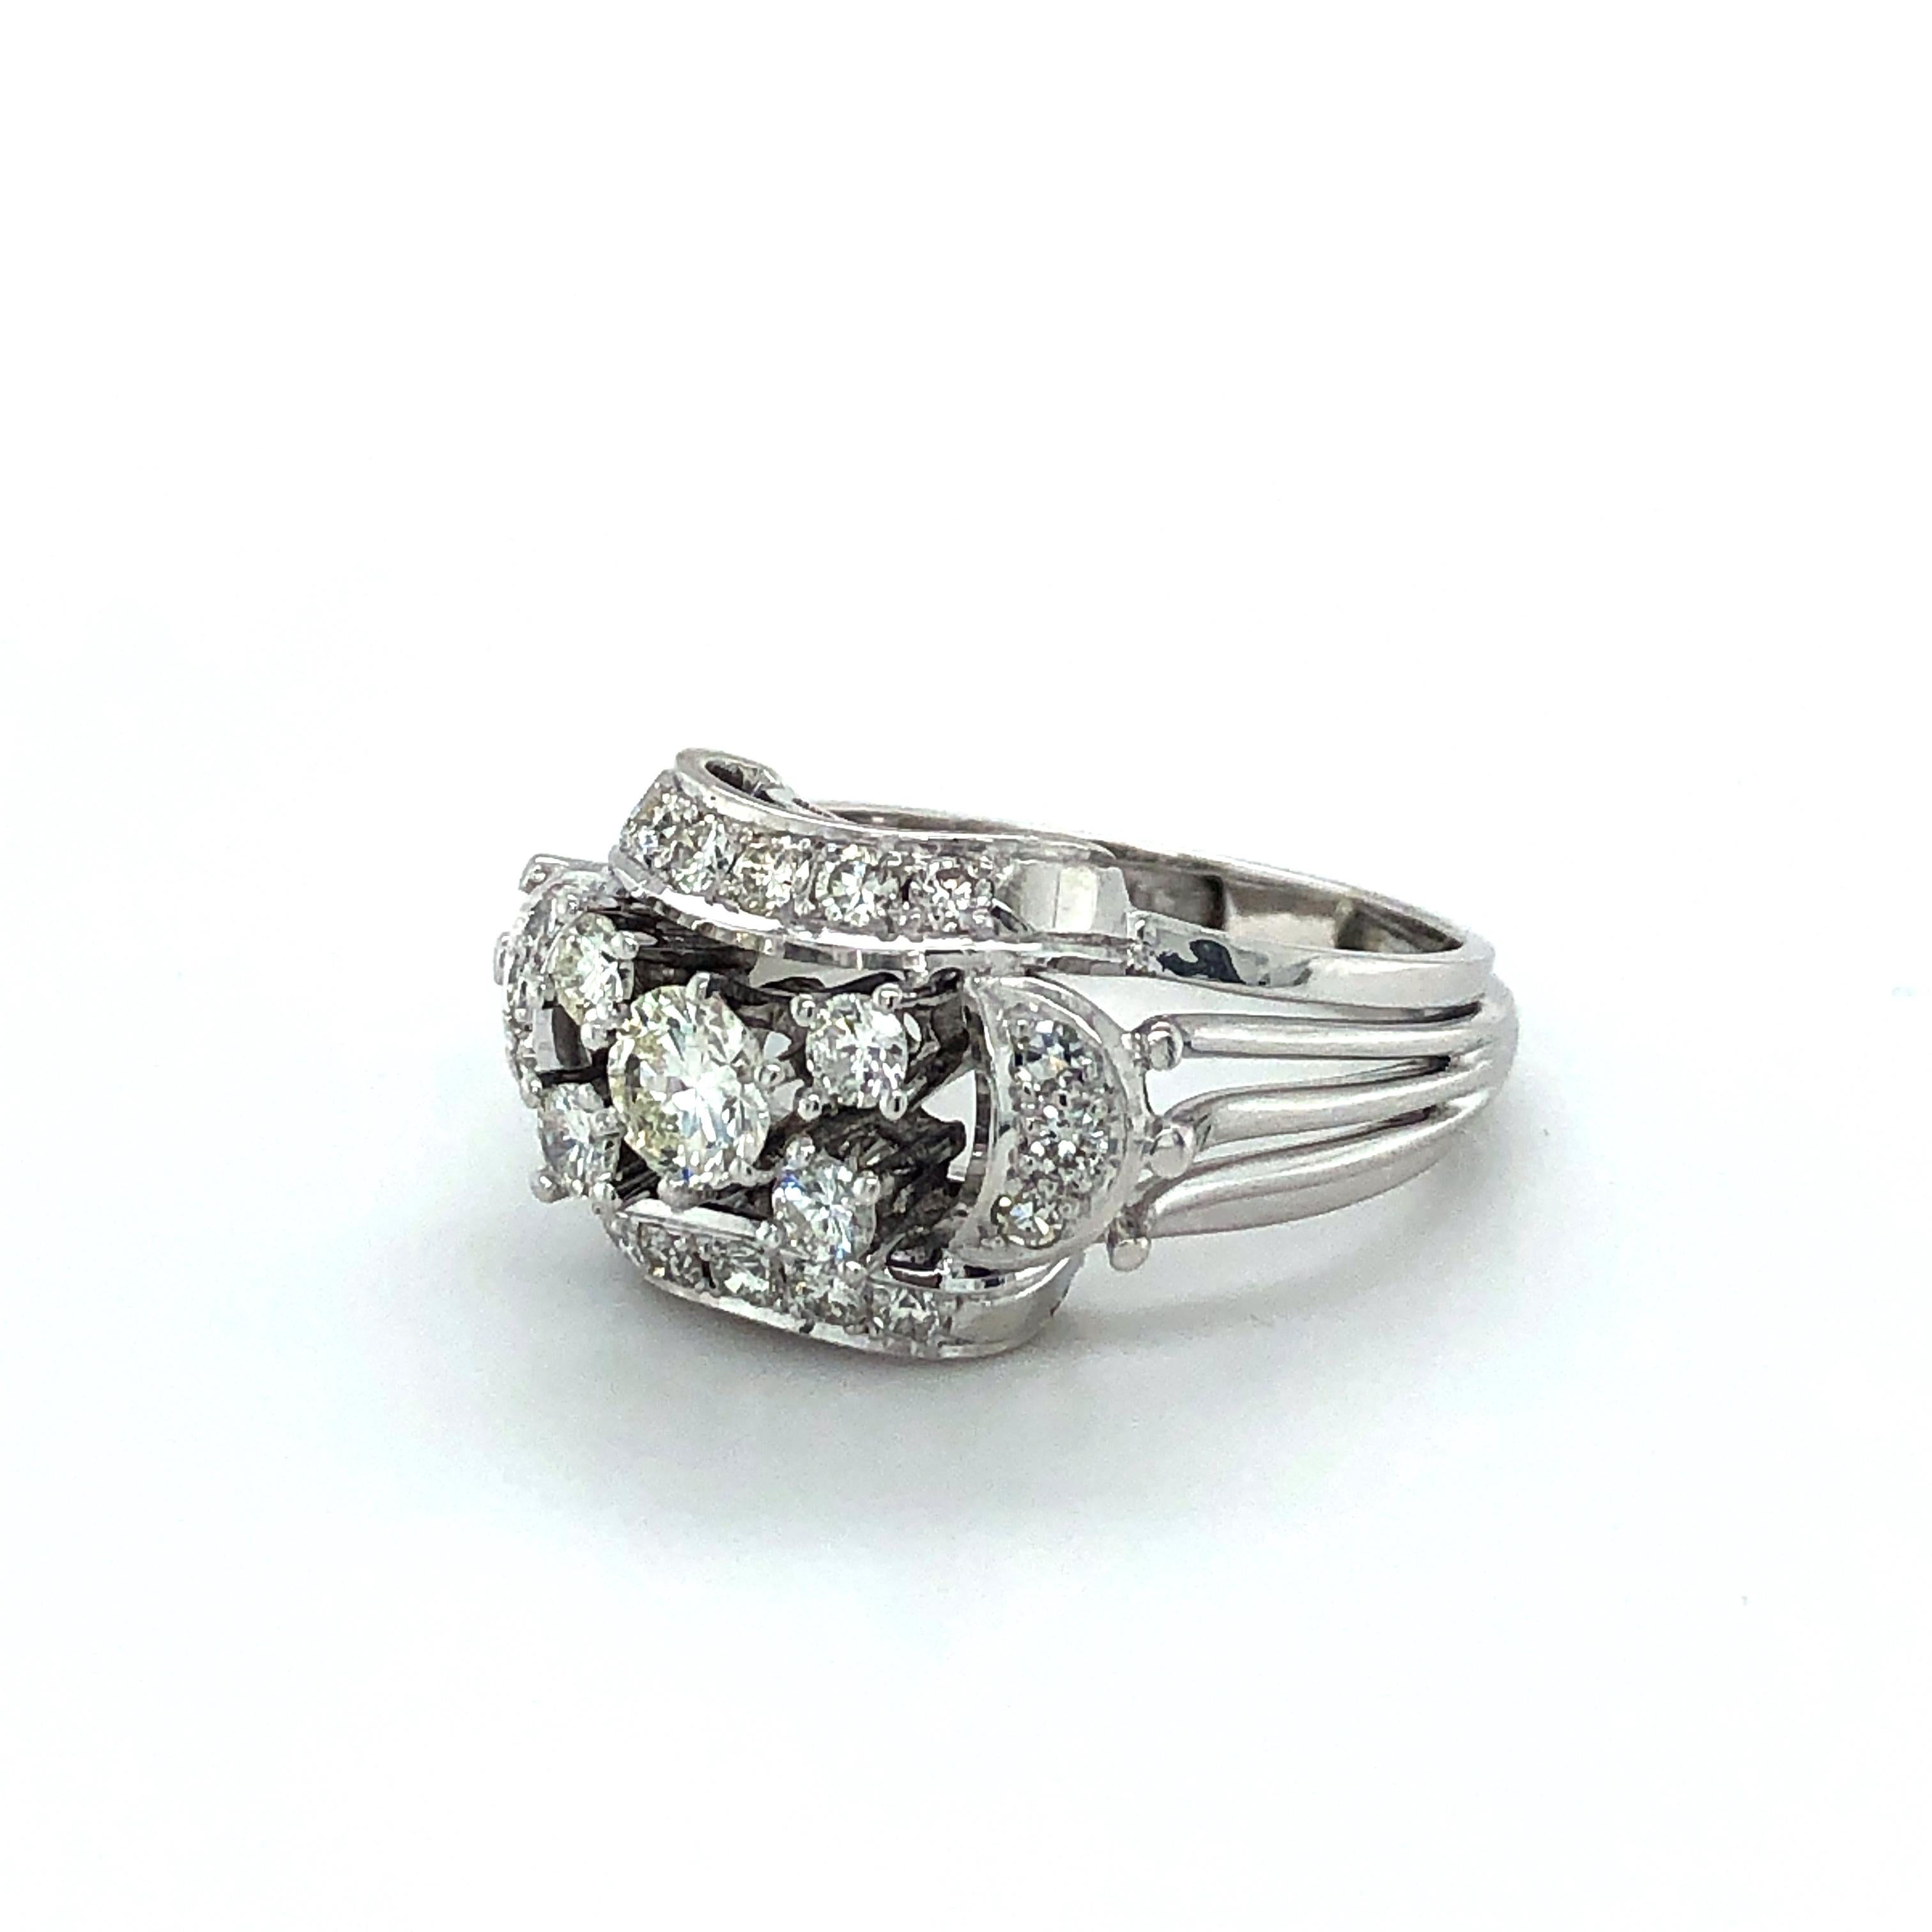 Brilliant Cut Stylish 1960s Diamond Ring in 18 Karat White Gold